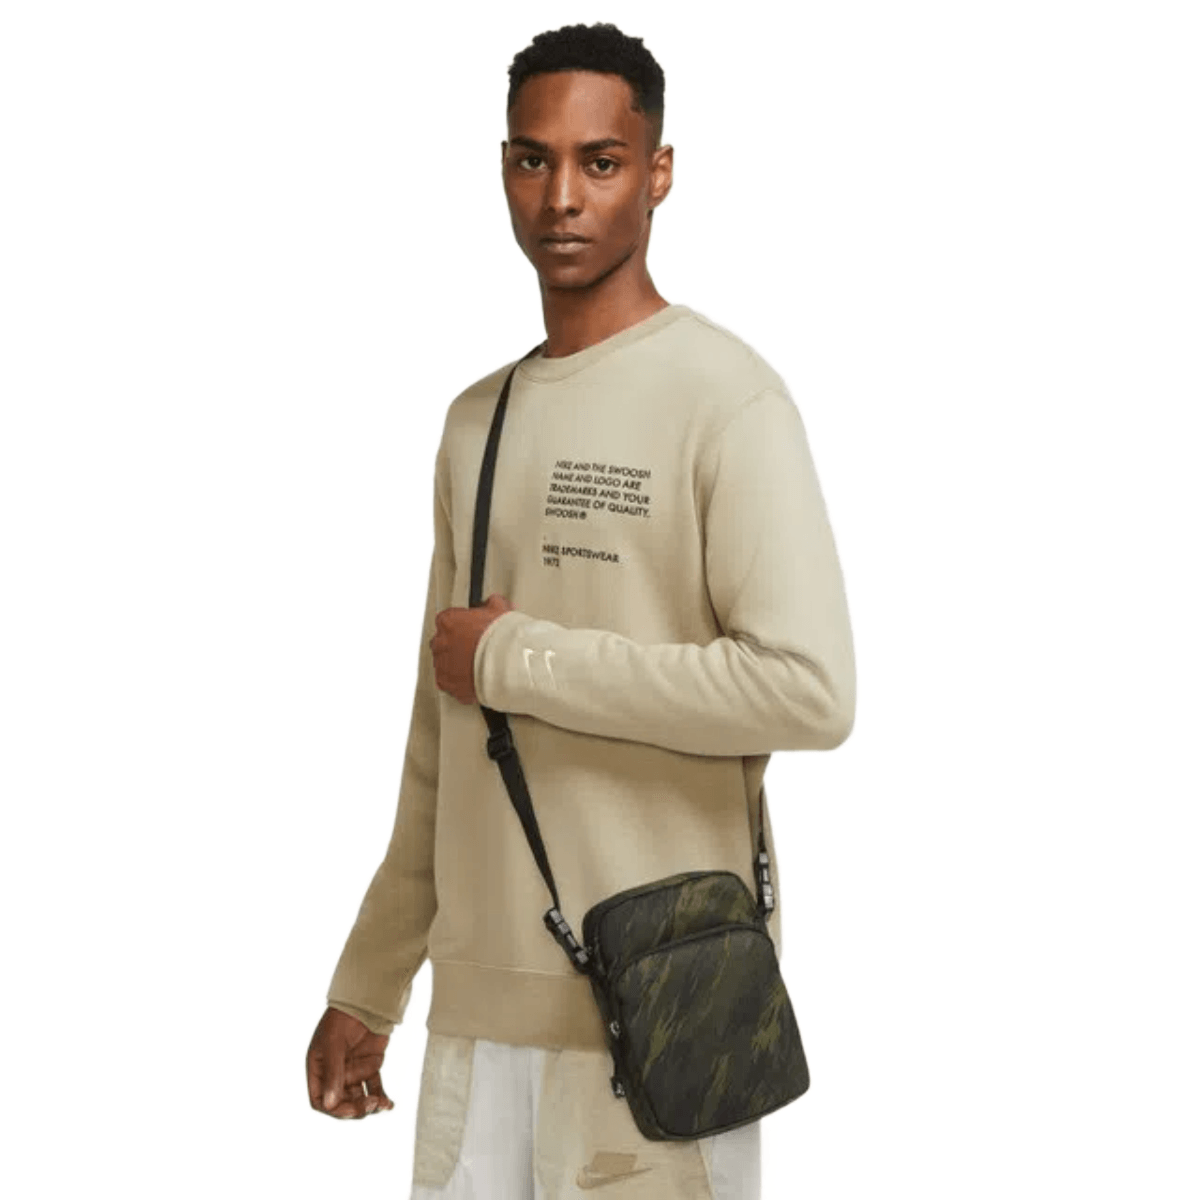 Calvin Klein Mono Mini Reporter Crossbody Bag - Black